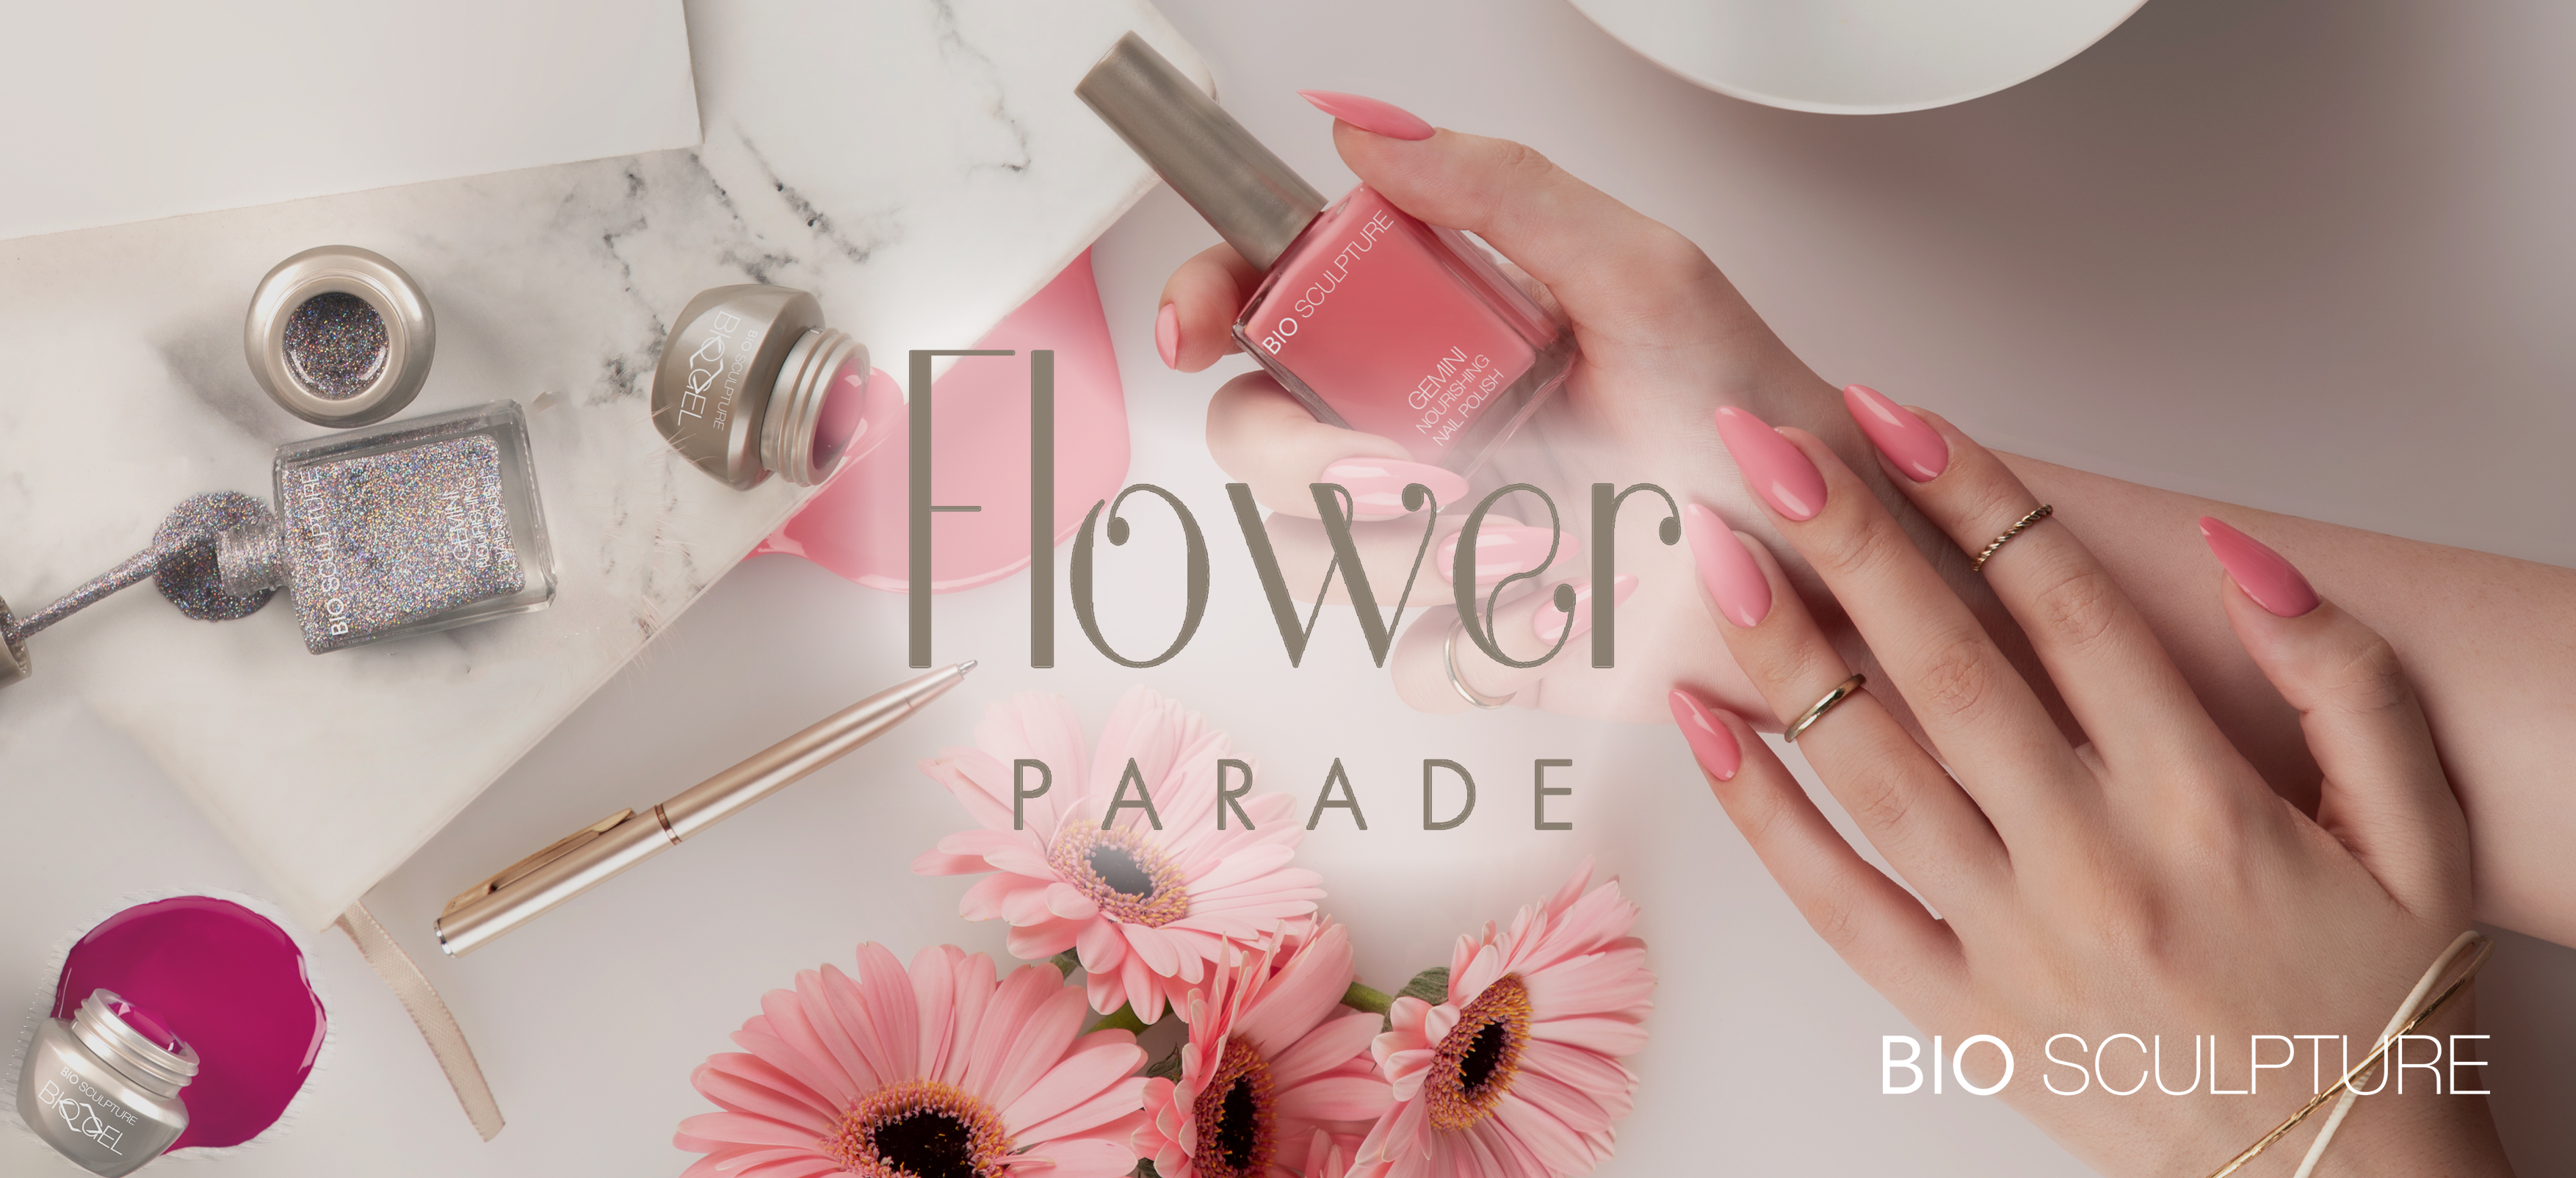 Home Banner - Flower Parade